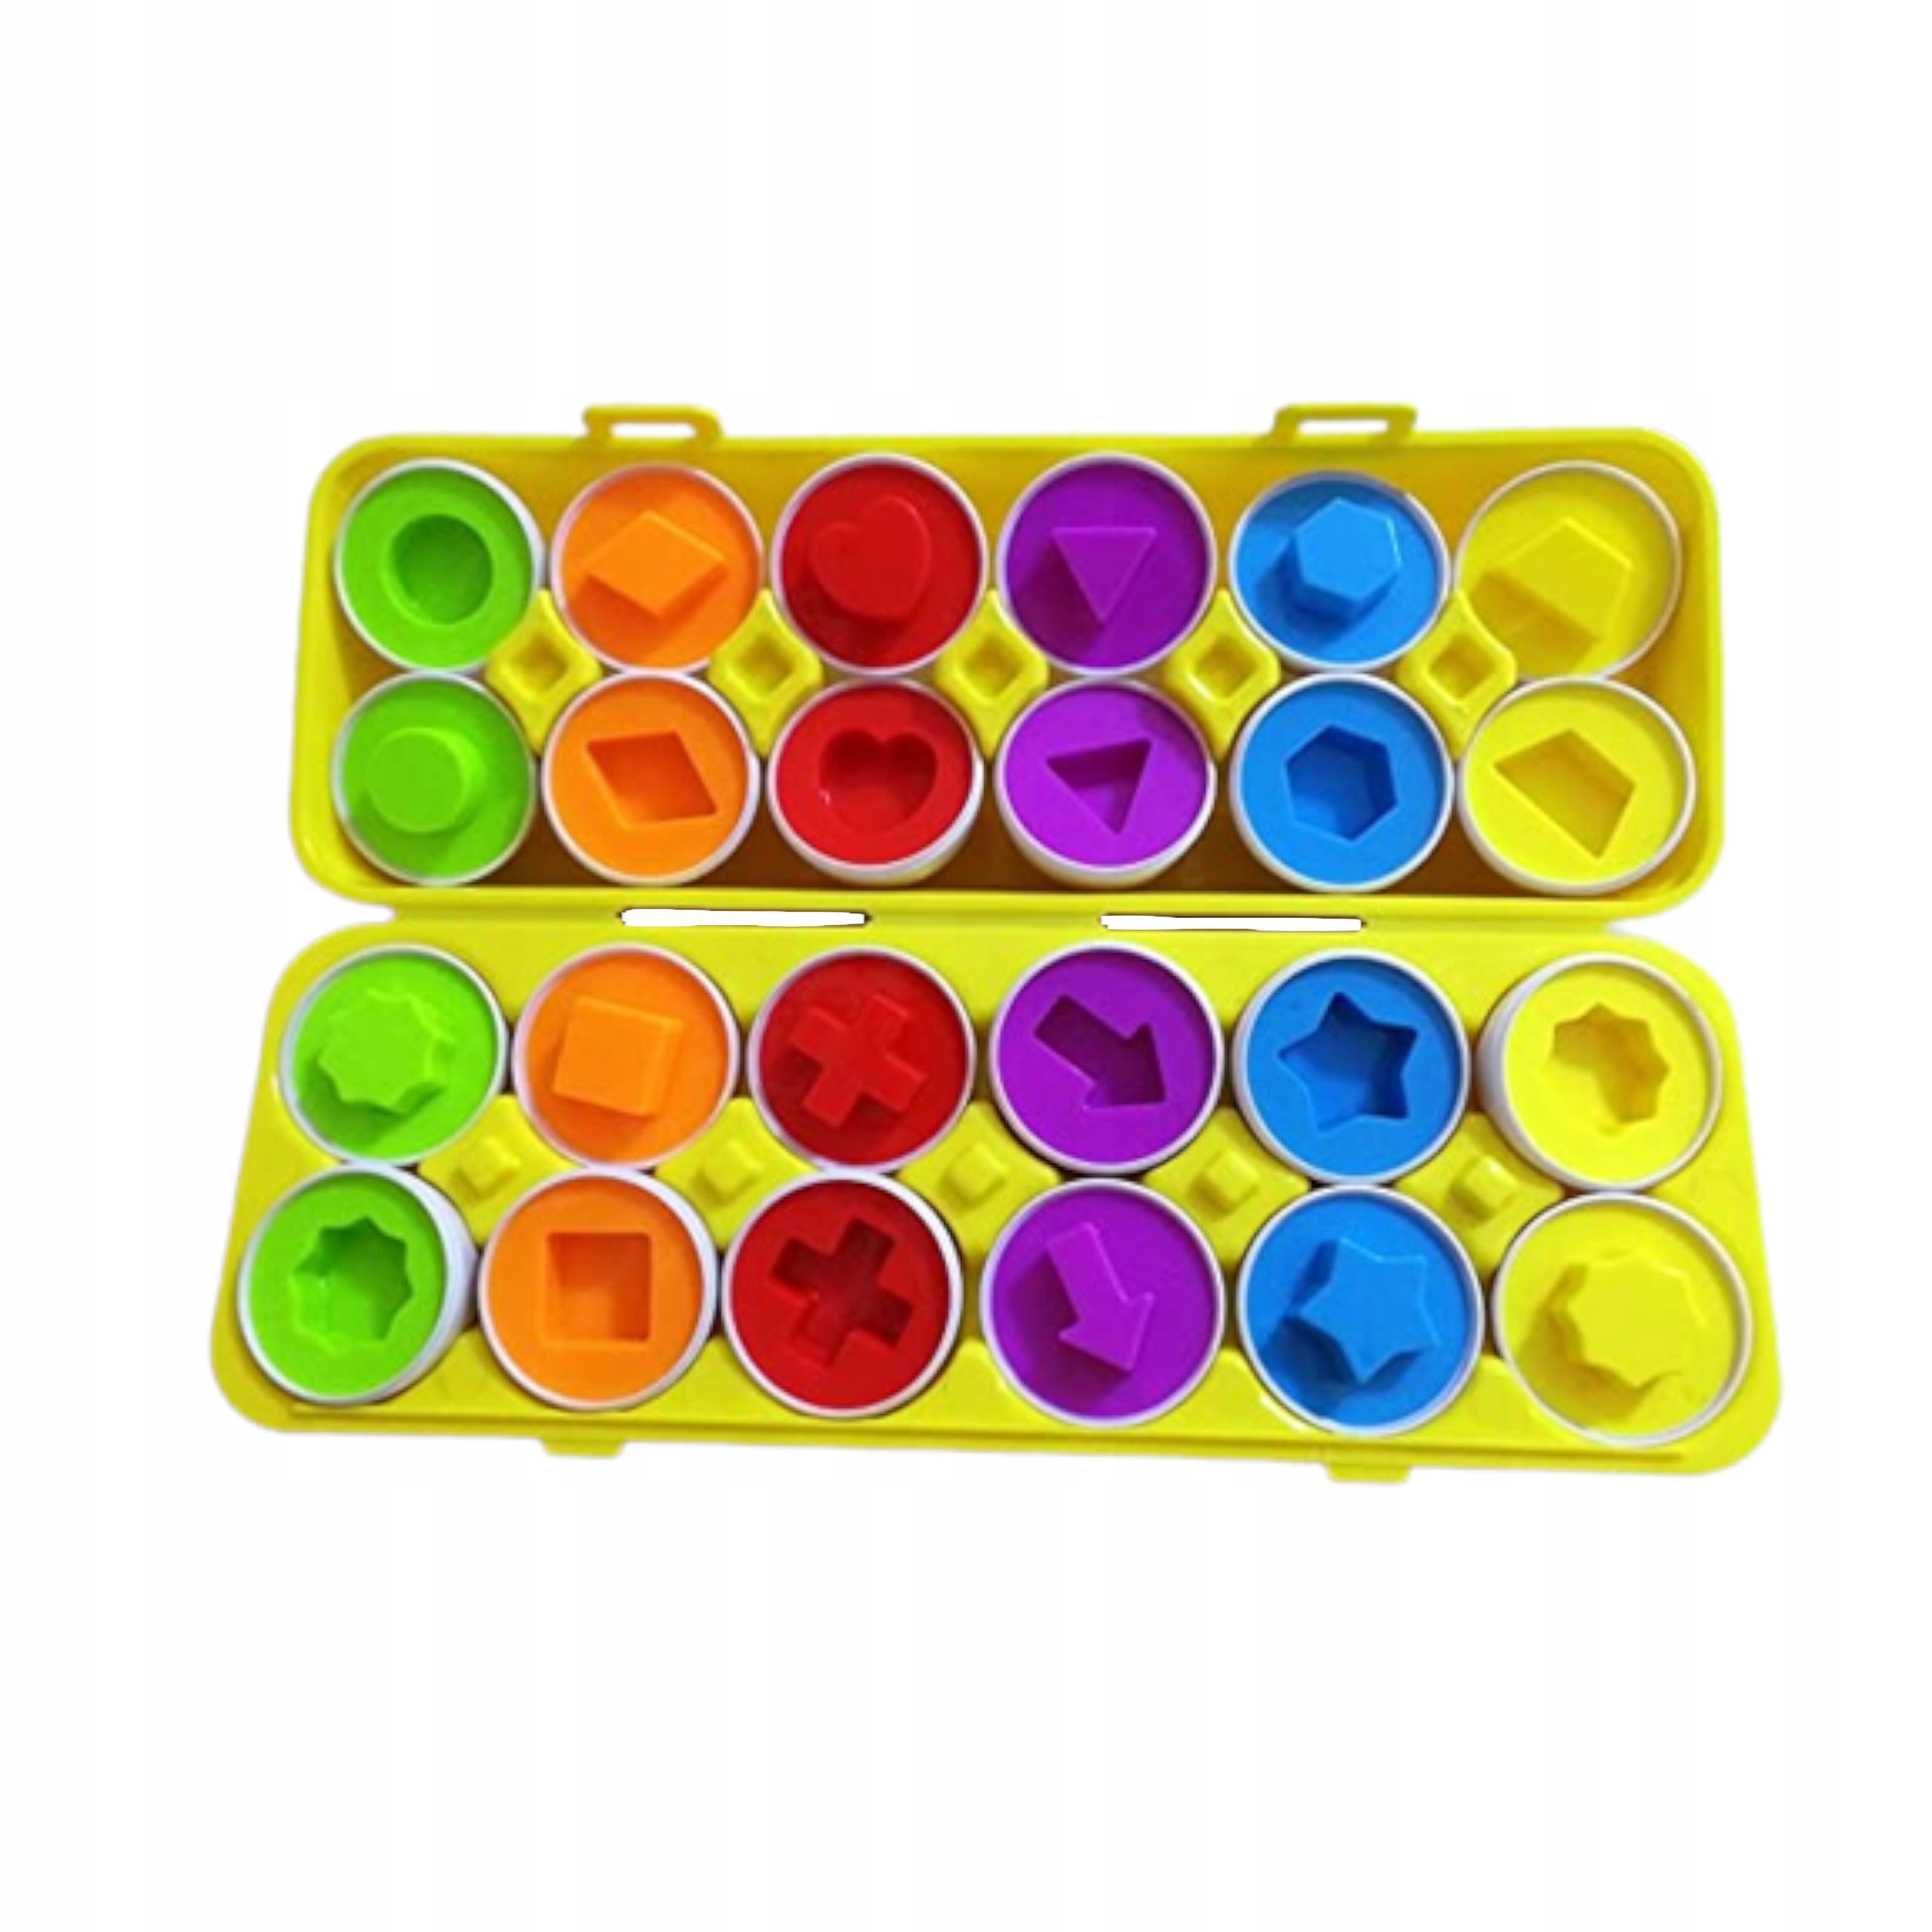 Układanka sorter jajka Montessori kształty LB33-3 Marka Luxma